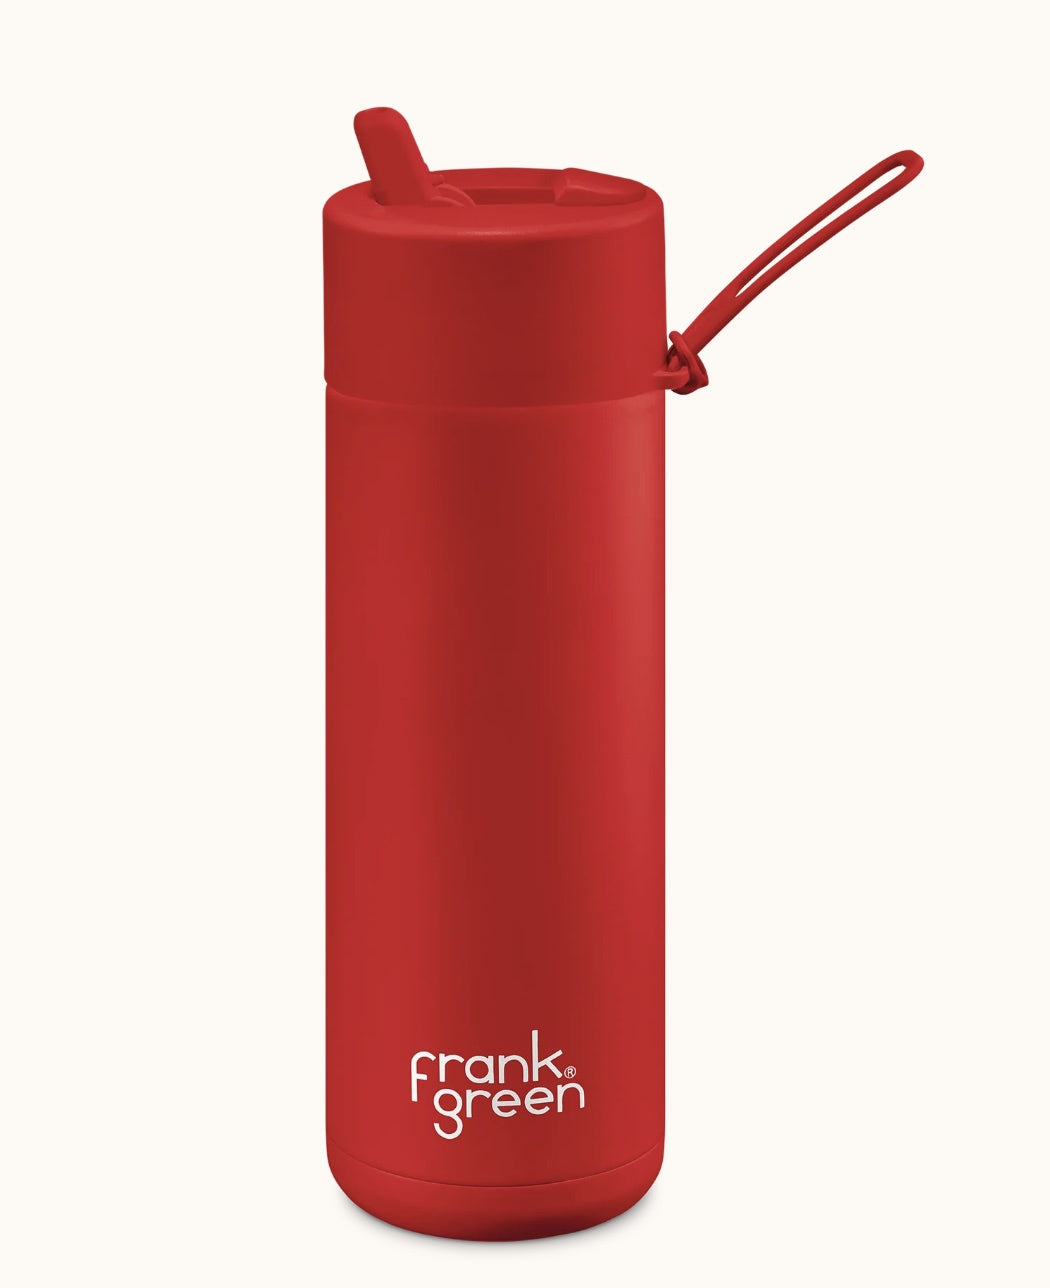 Limited Edition RED 20oz / 595ml Stainless Steel Ceramic Reusable Bottle Drink Bottles Frank Green   